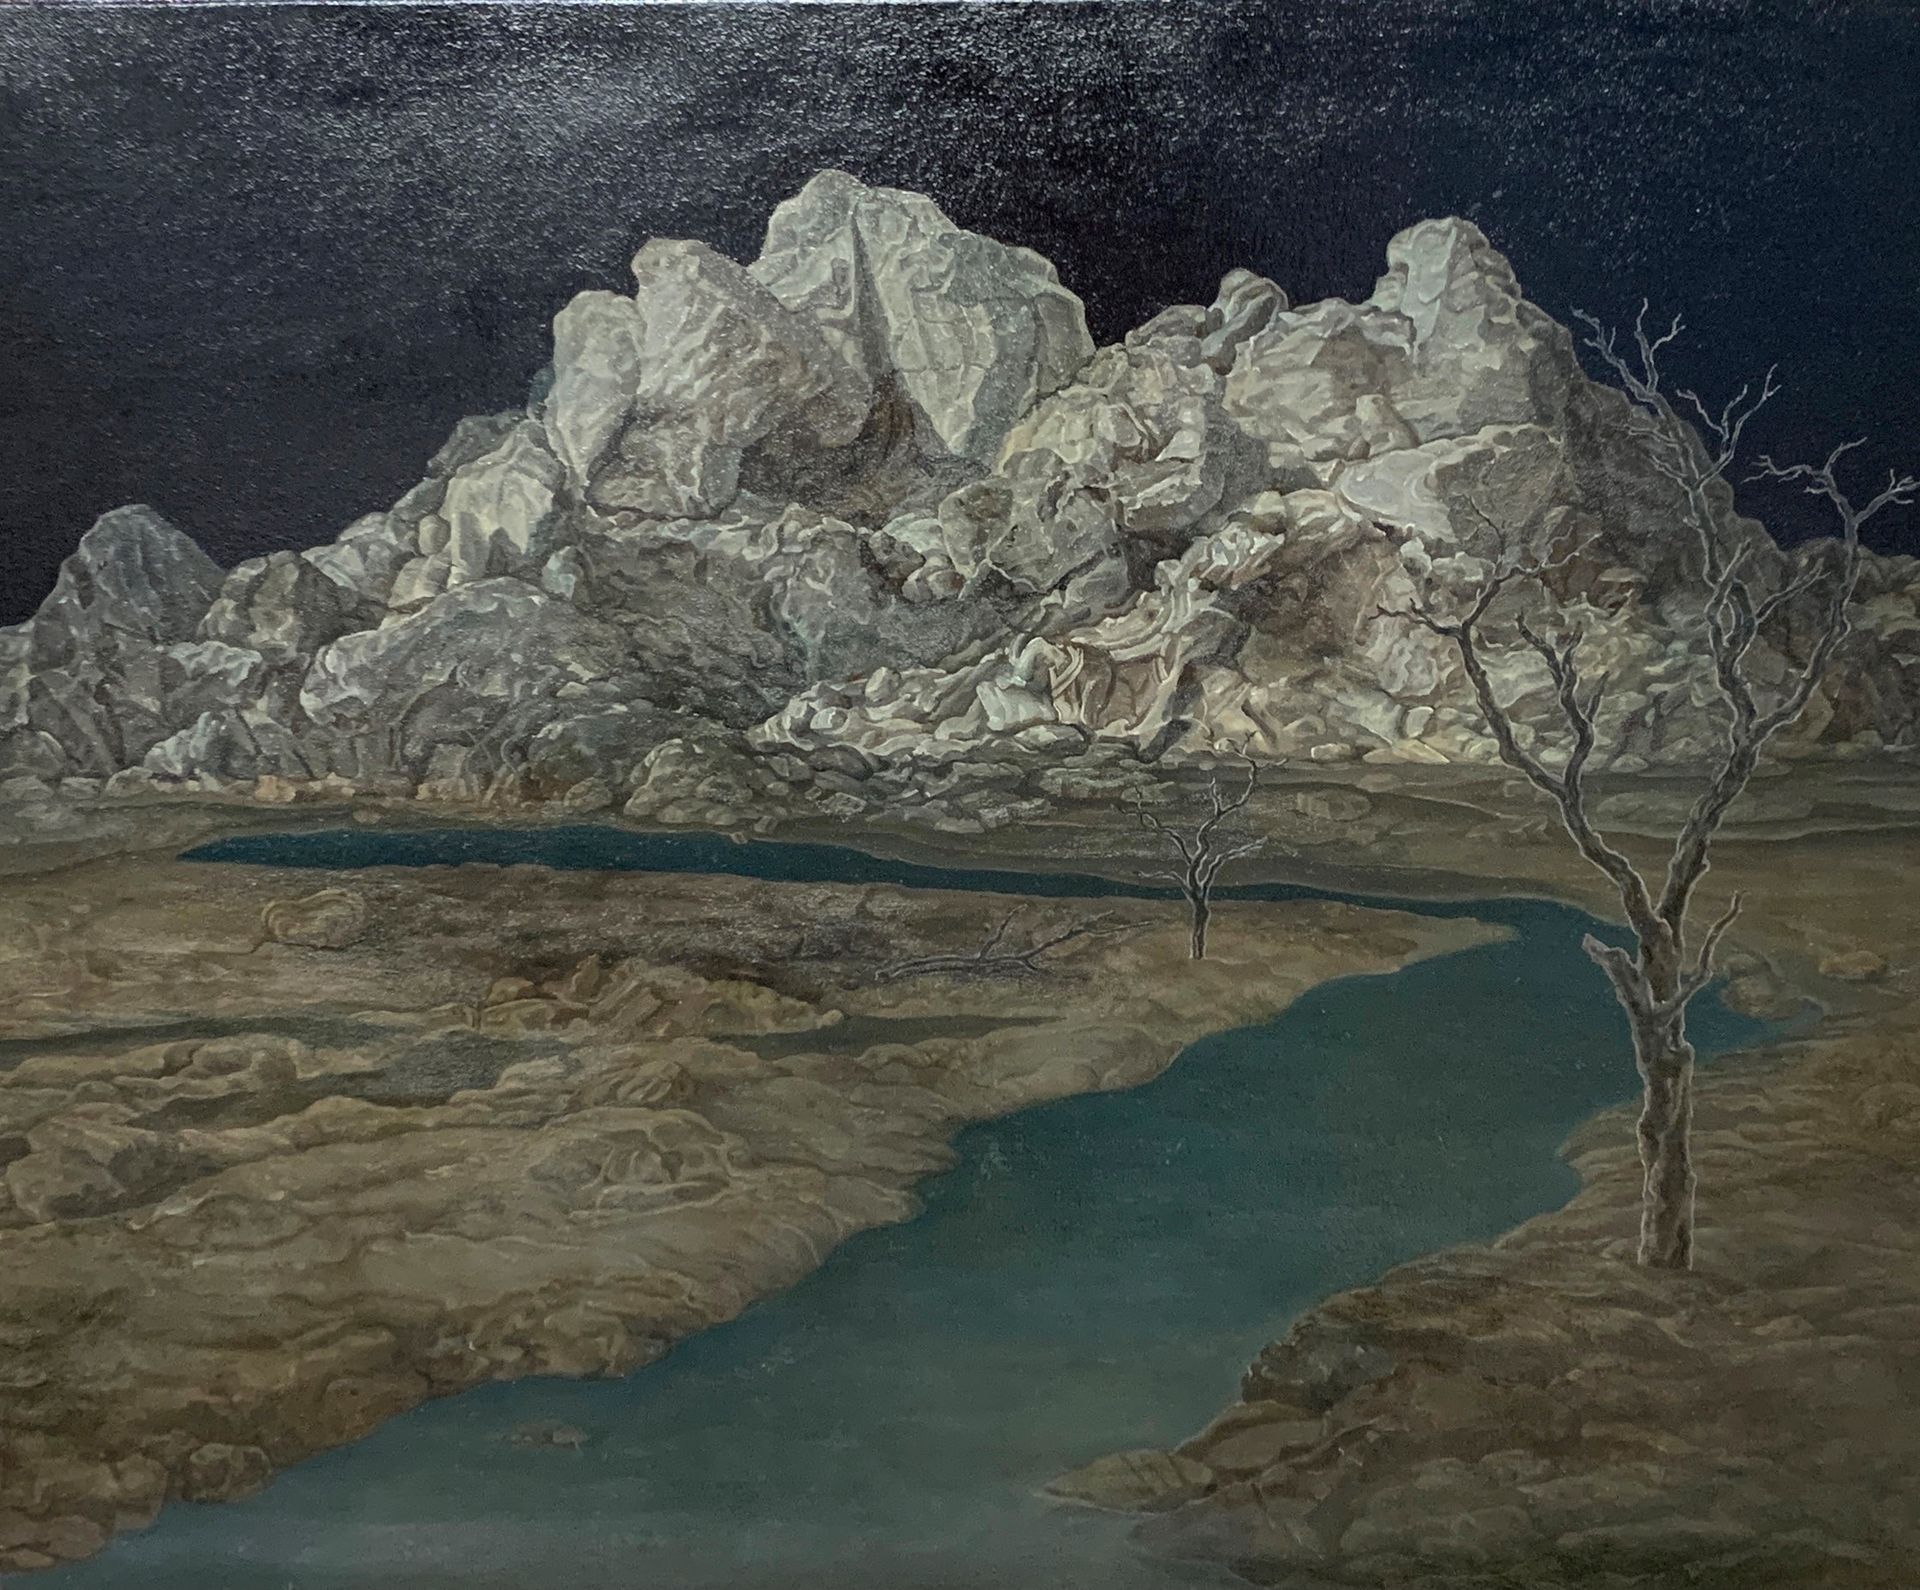 LI DONGLU (1982) Mountain and river, 2016
Huile sur toile
Dim. : 38 x 46 cm